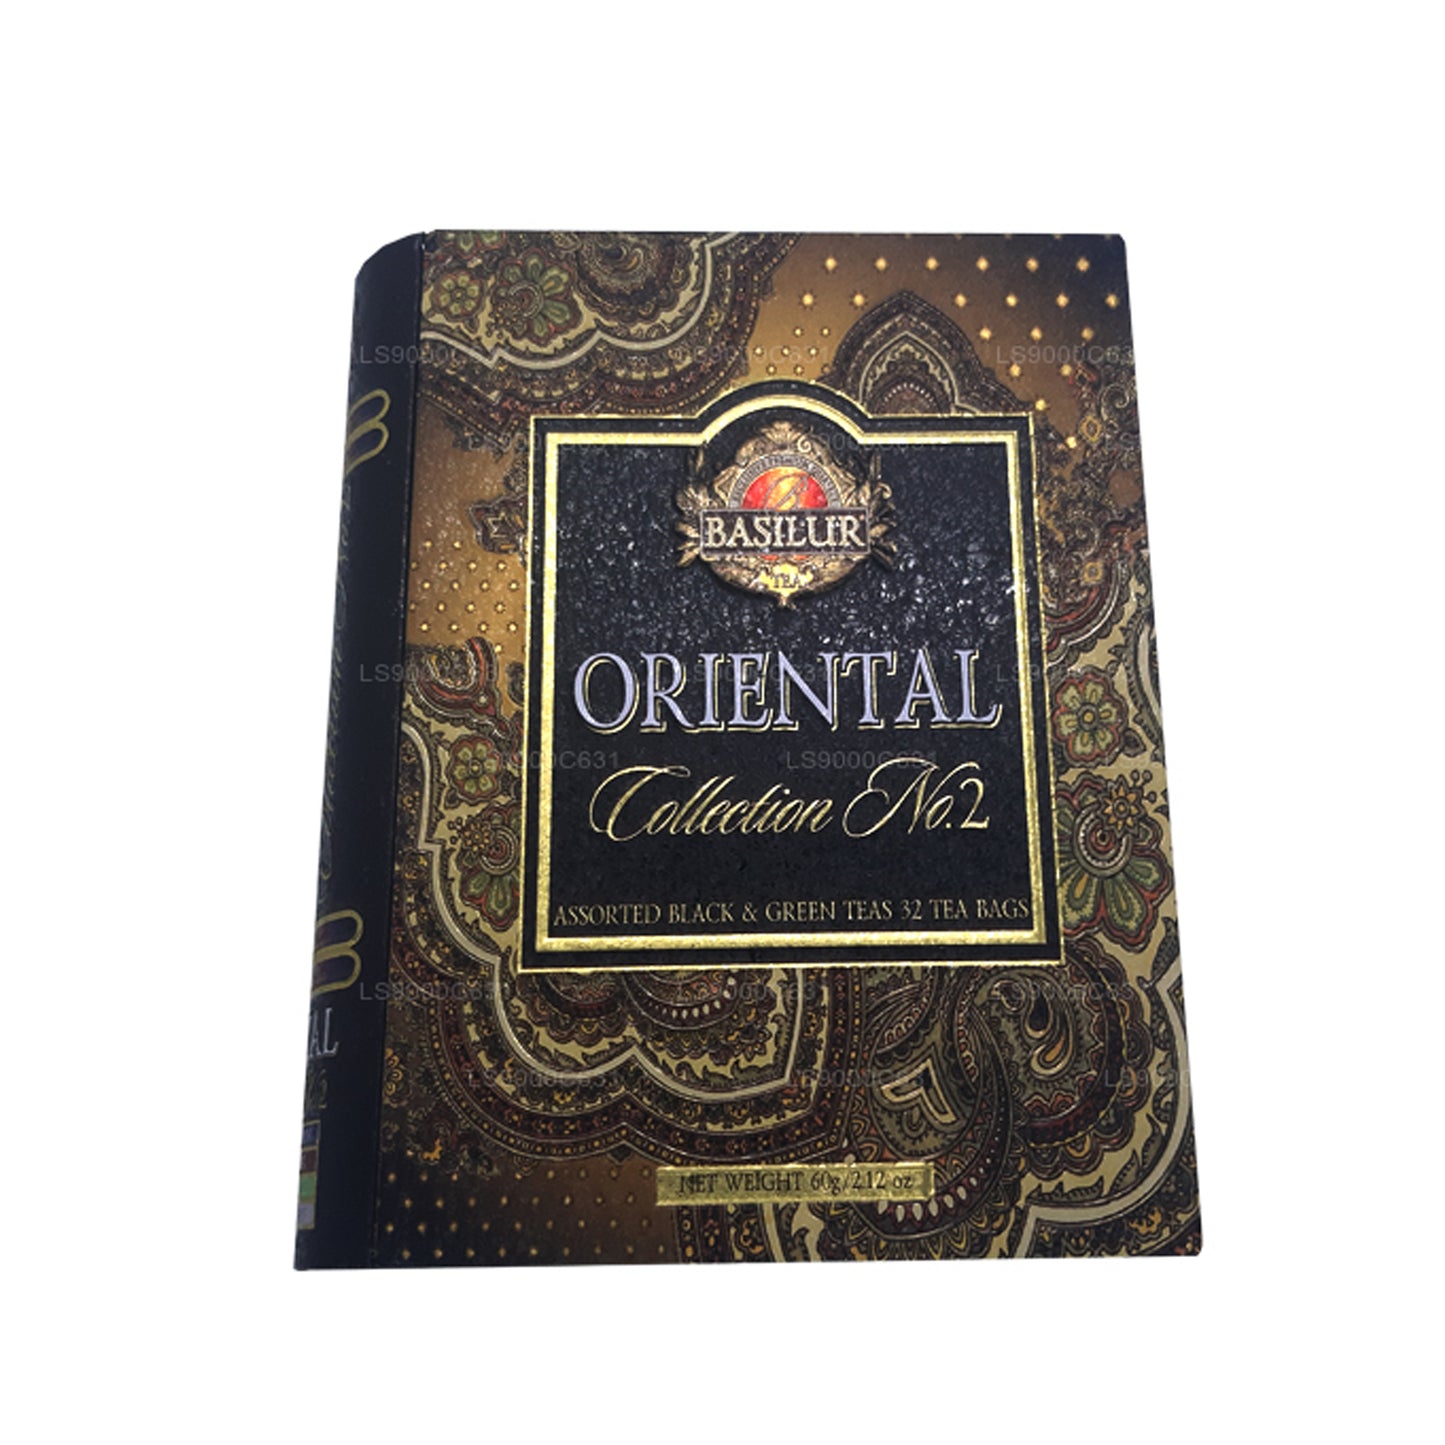 Basilur Oriental Collection Tea Book Vol.2 (60g) 32 torebki herbaty